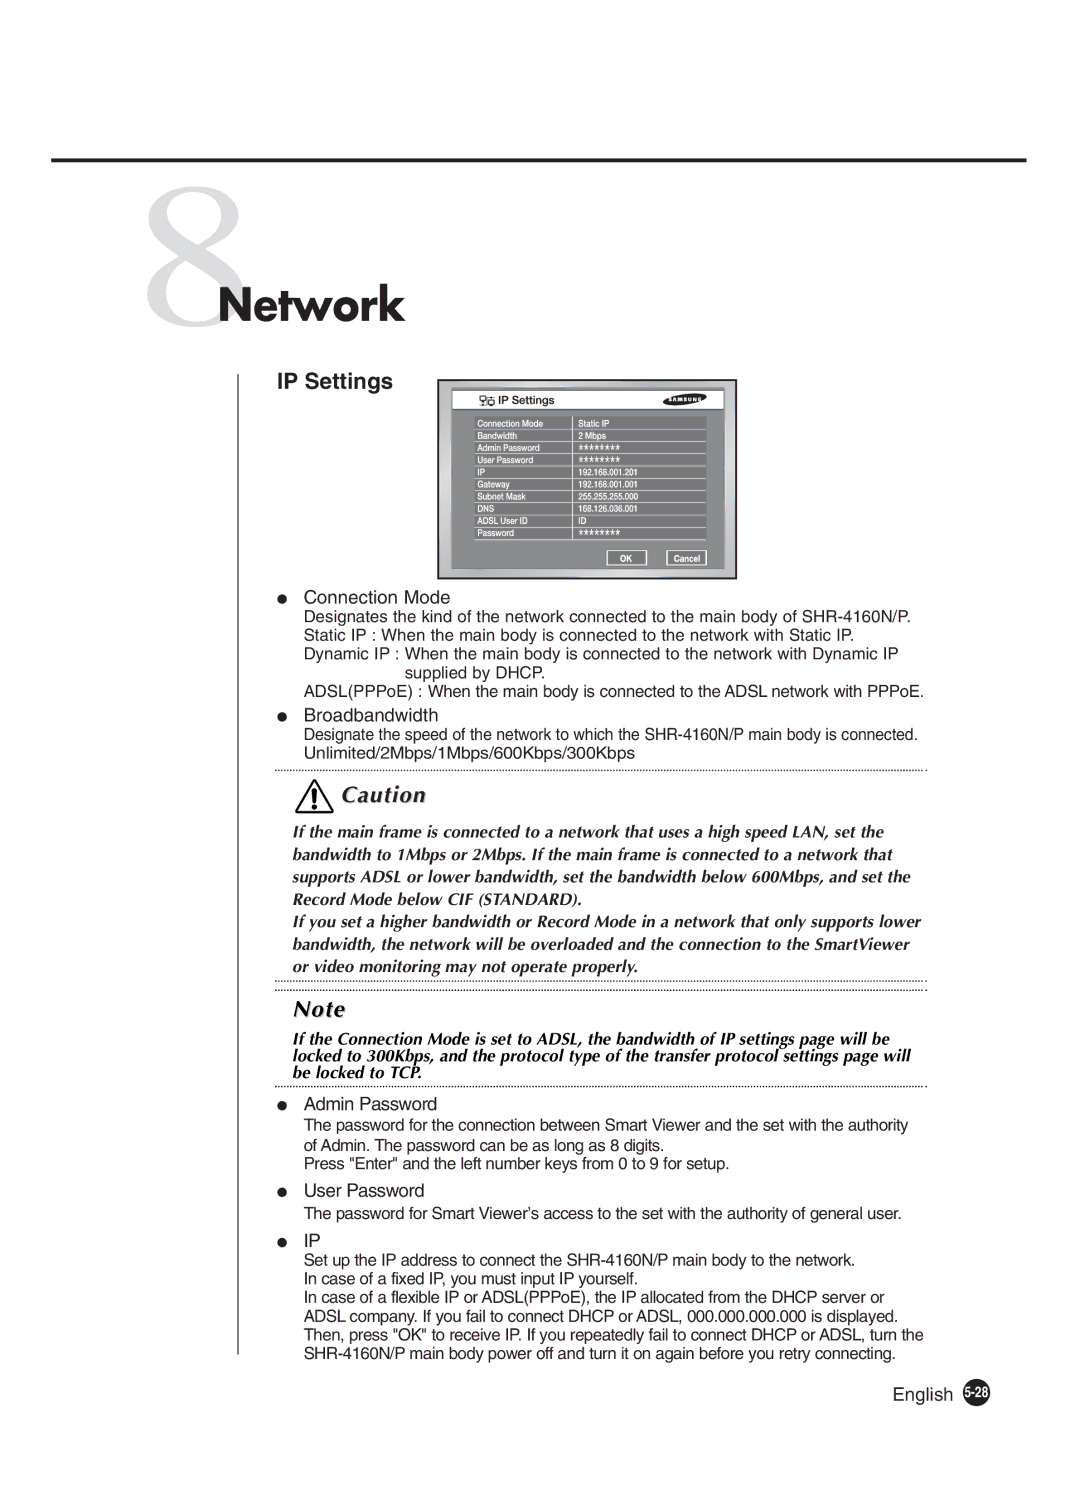 Samsung SHR-4160P manual 8Network, Connection Mode, Broadbandwidth, Admin Password, User Password 